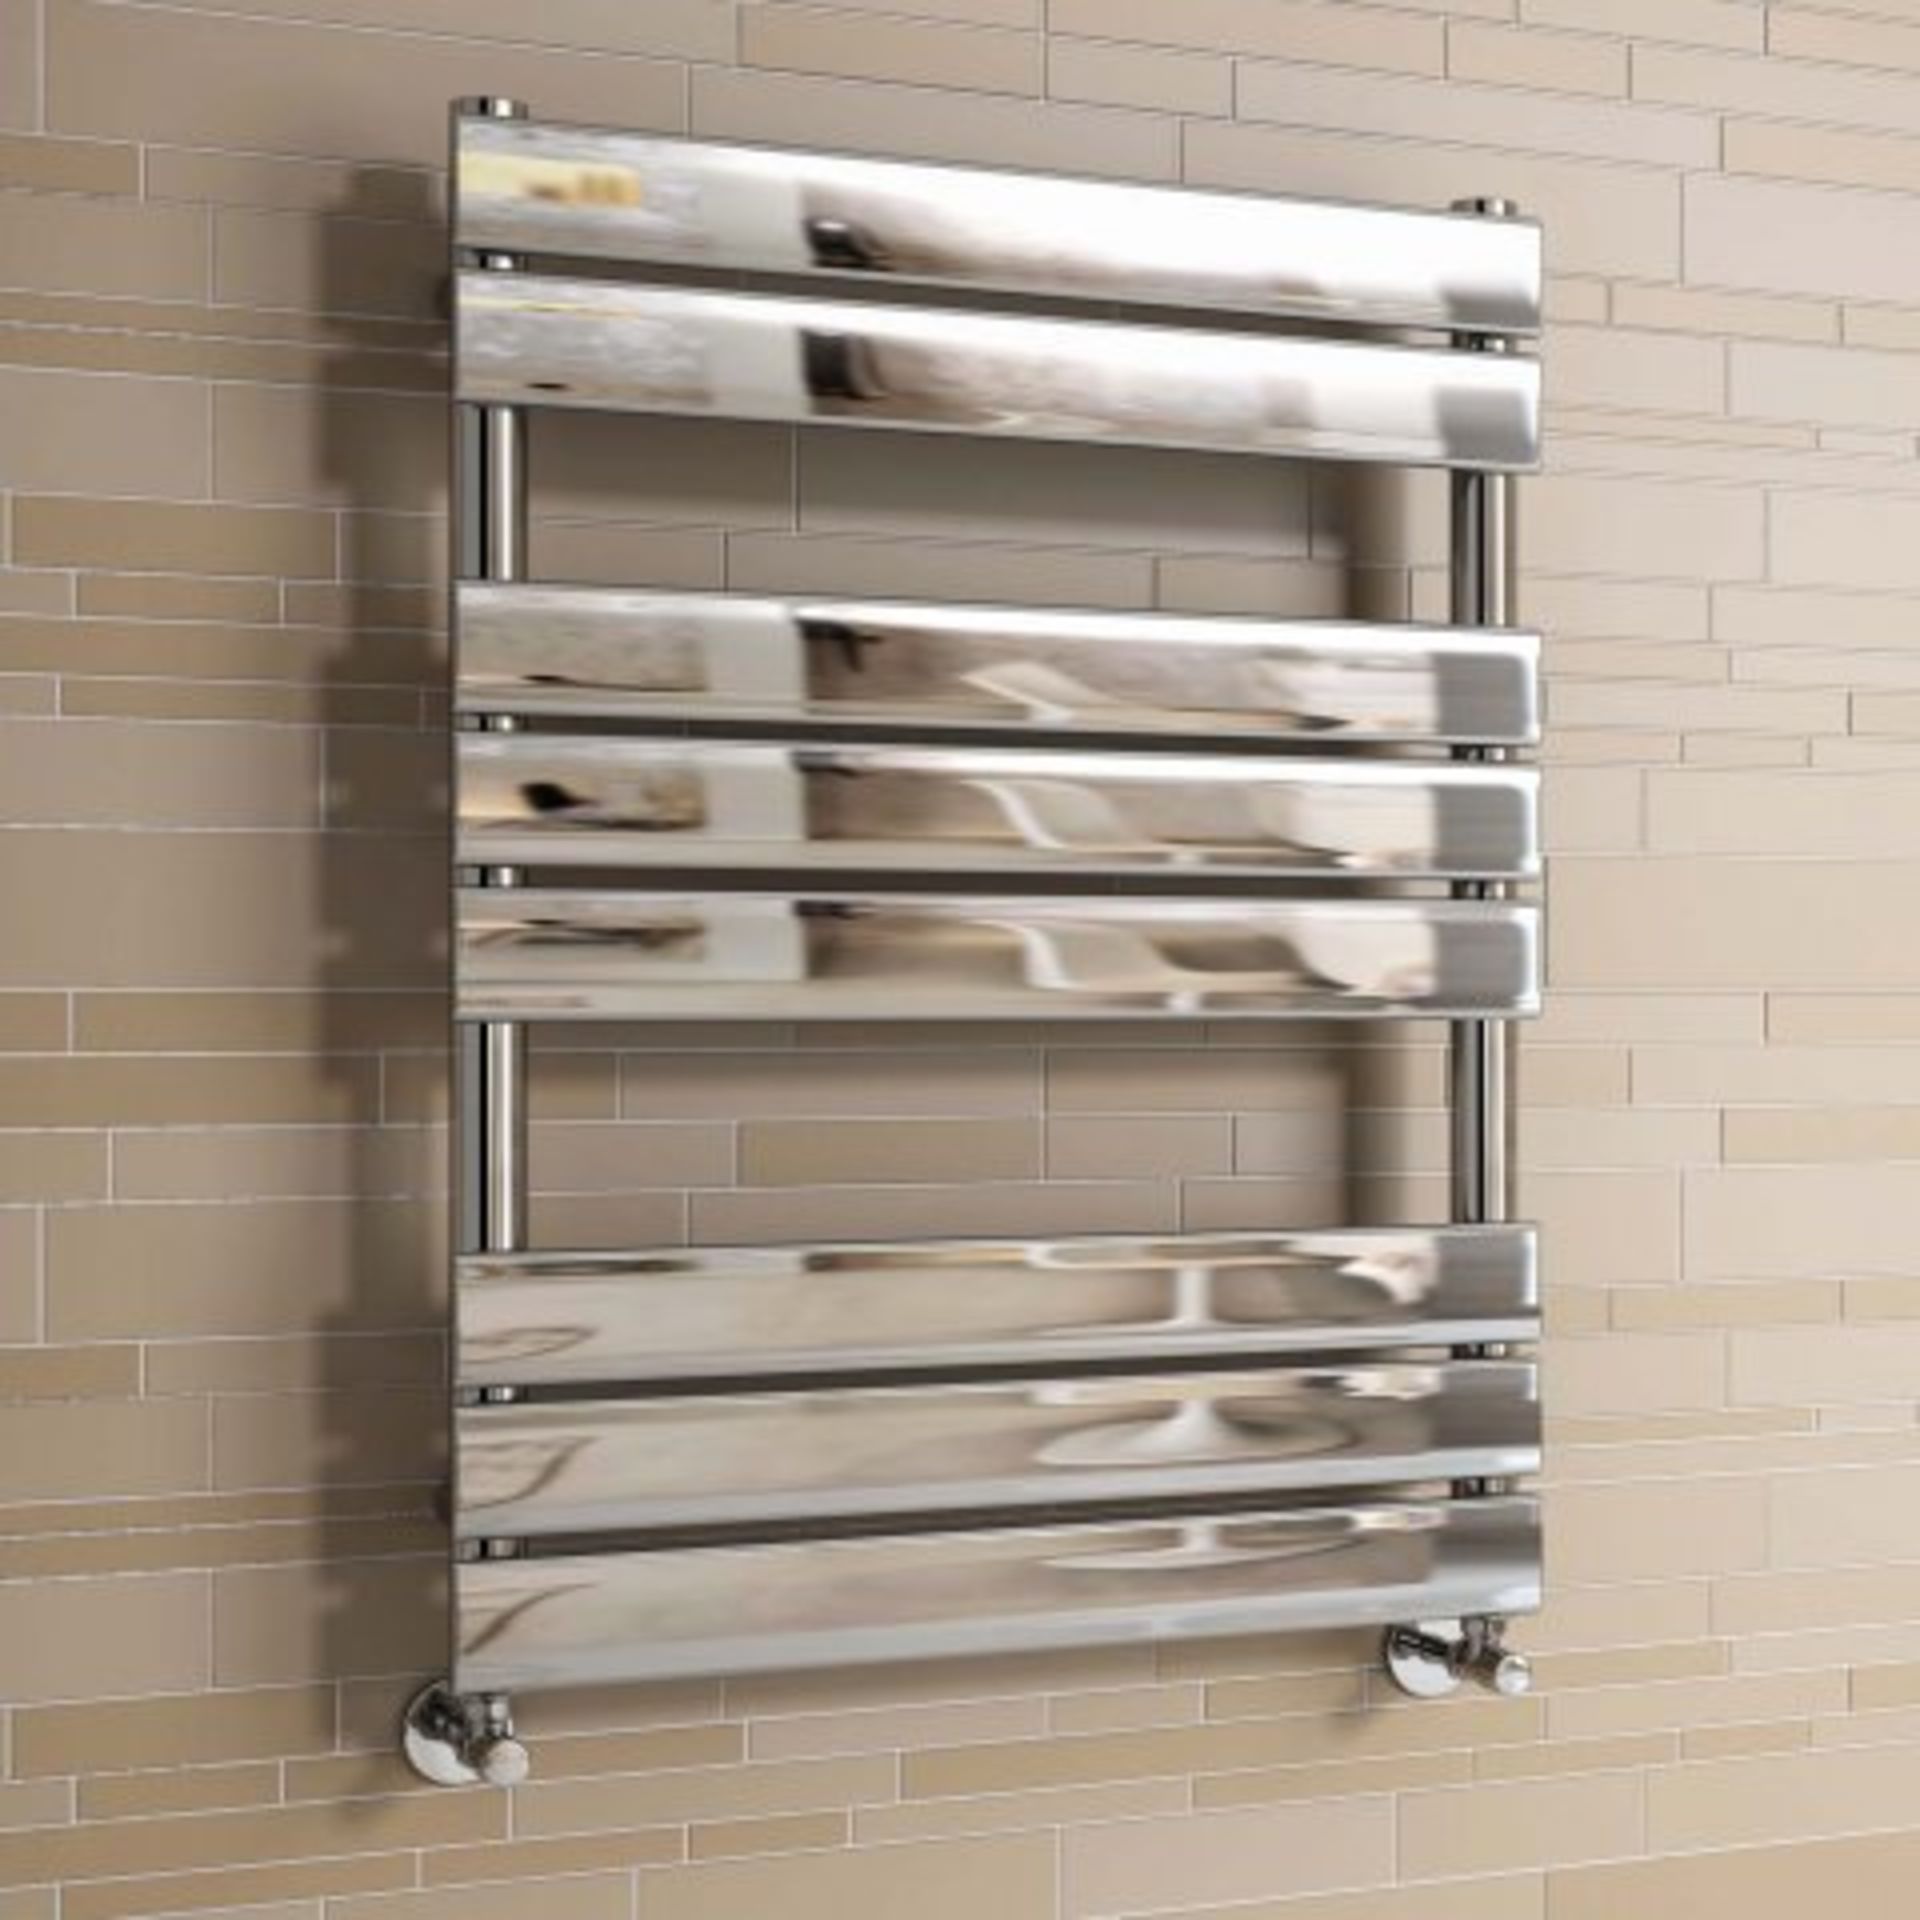 (K151) 800x600mm Chrome Flat Panel Ladder Towel Radiator - Francis Range. RRP £265.99. Stylishly